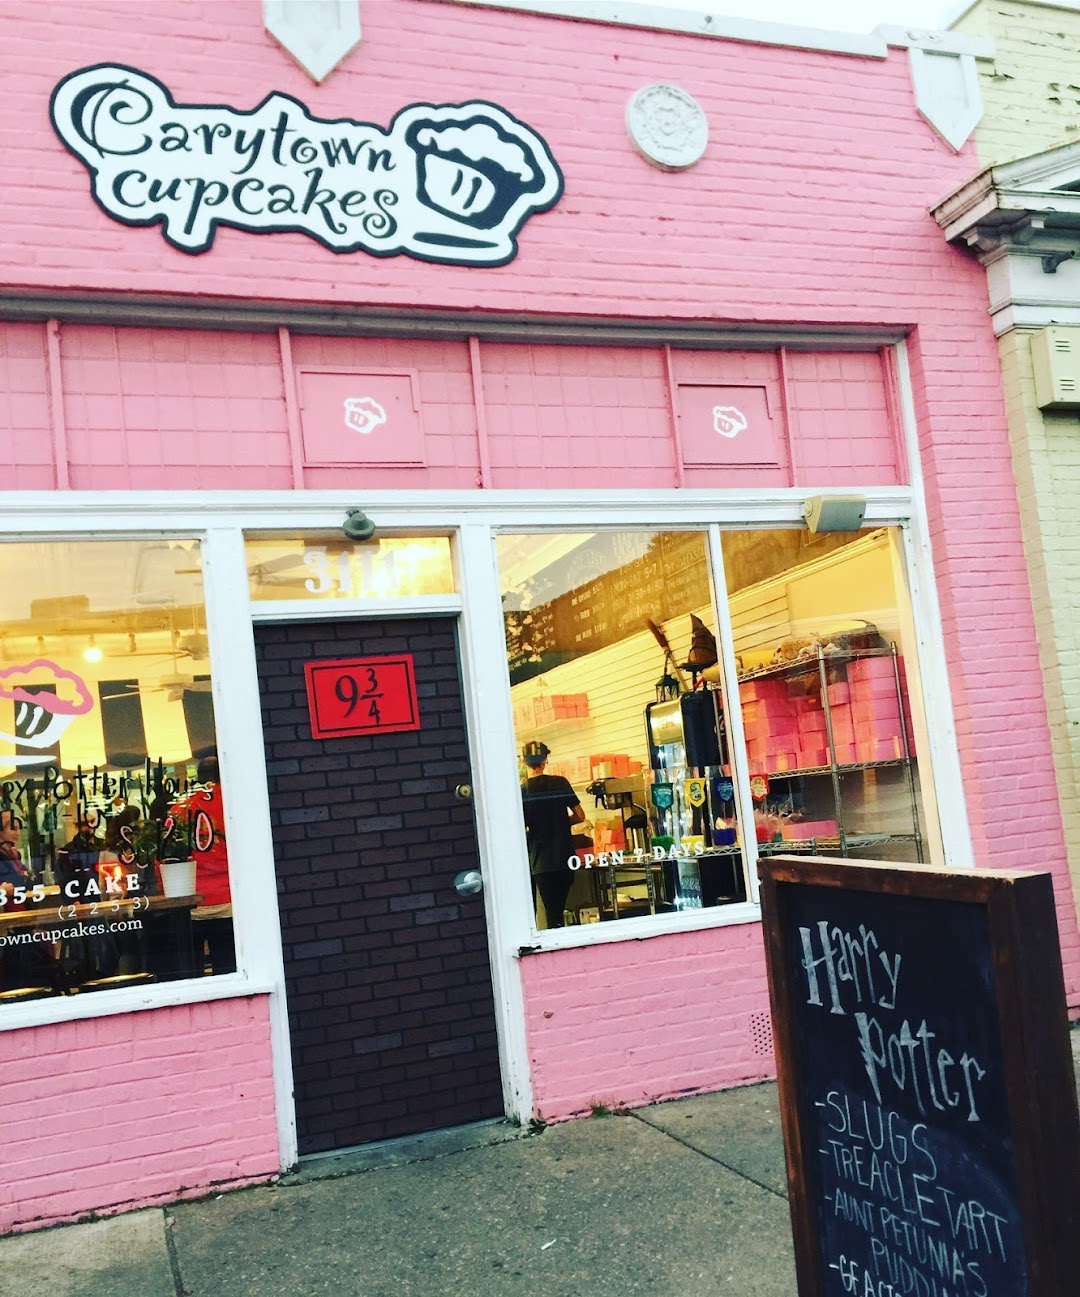 Carytown Cupcakes - Carytown Location